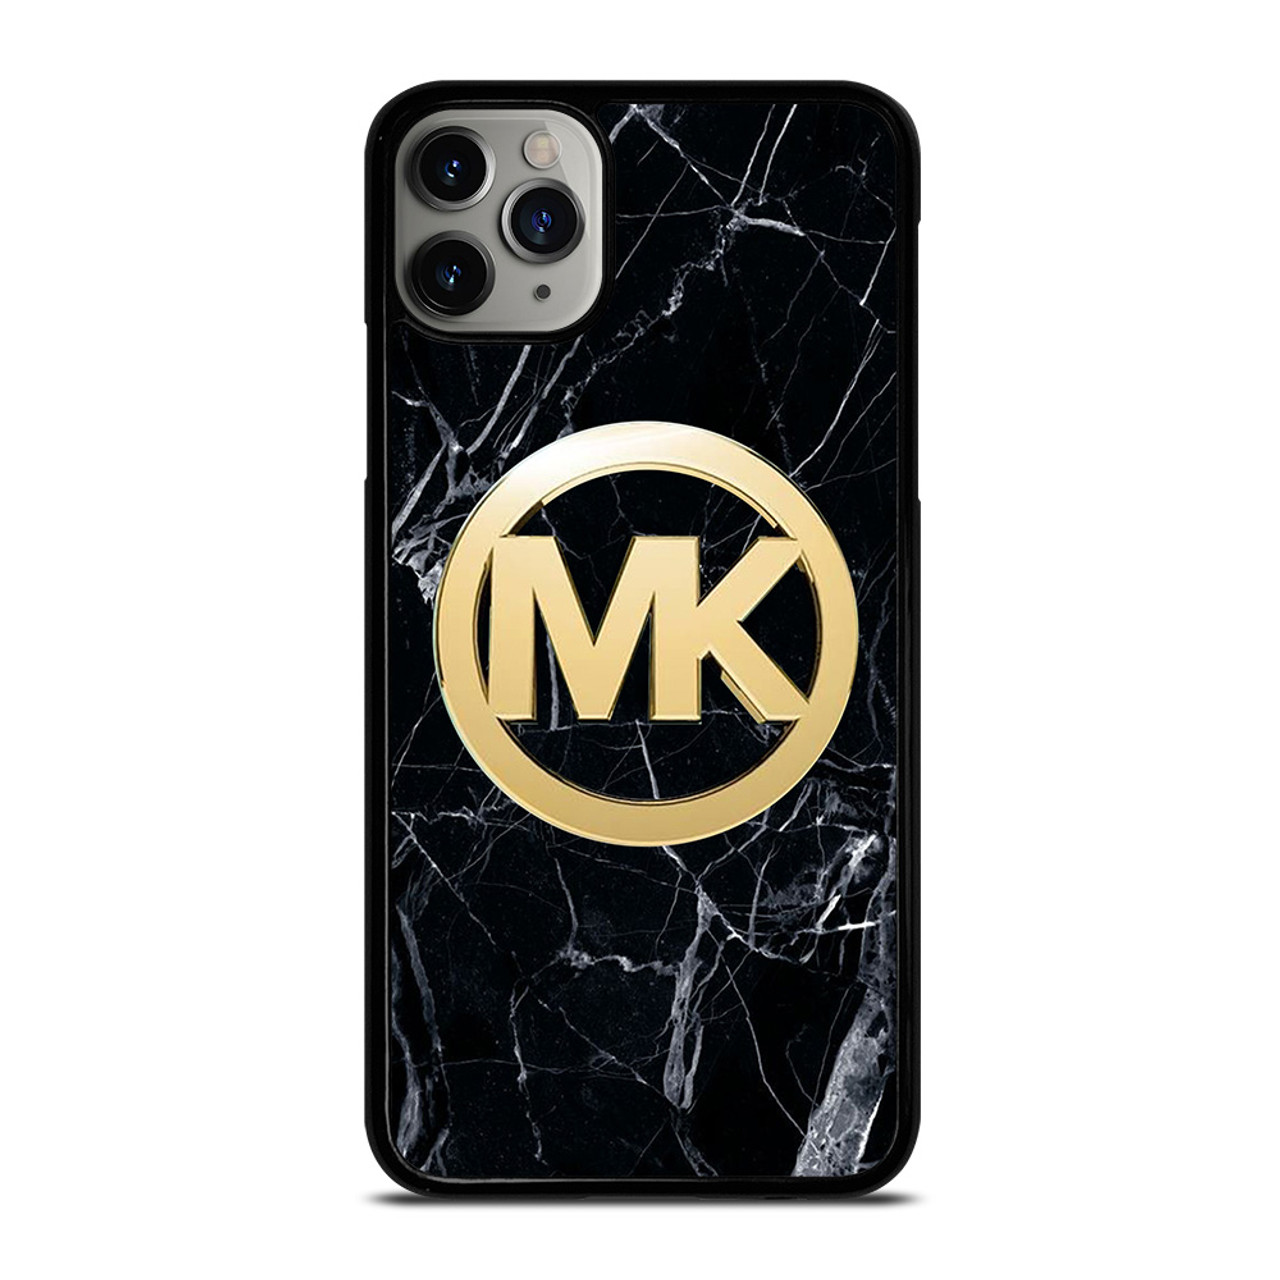 MICHAEL KORS GOLD MK LOGO iPhone 11 Pro Max Case Cover